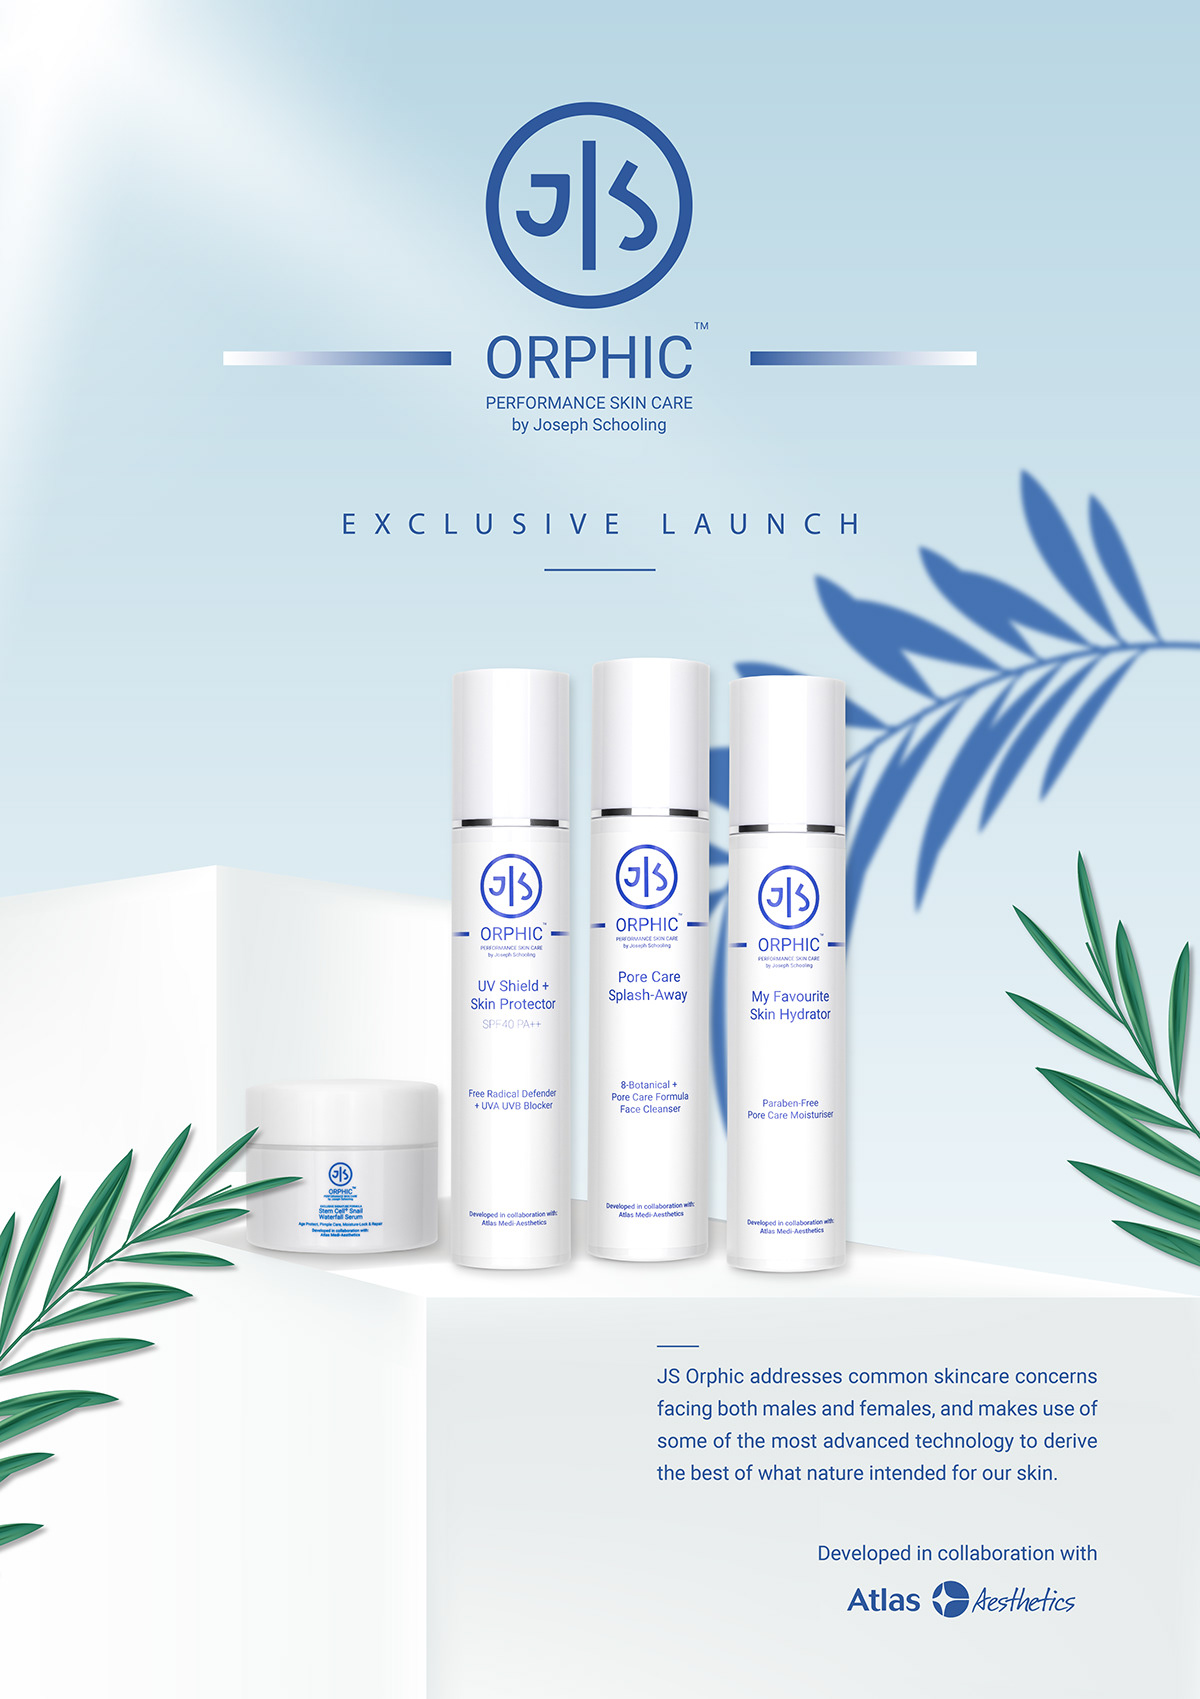 editorial marketing   Advertising  product launch skincare cosmetics Joseph Schooling branding  beauty